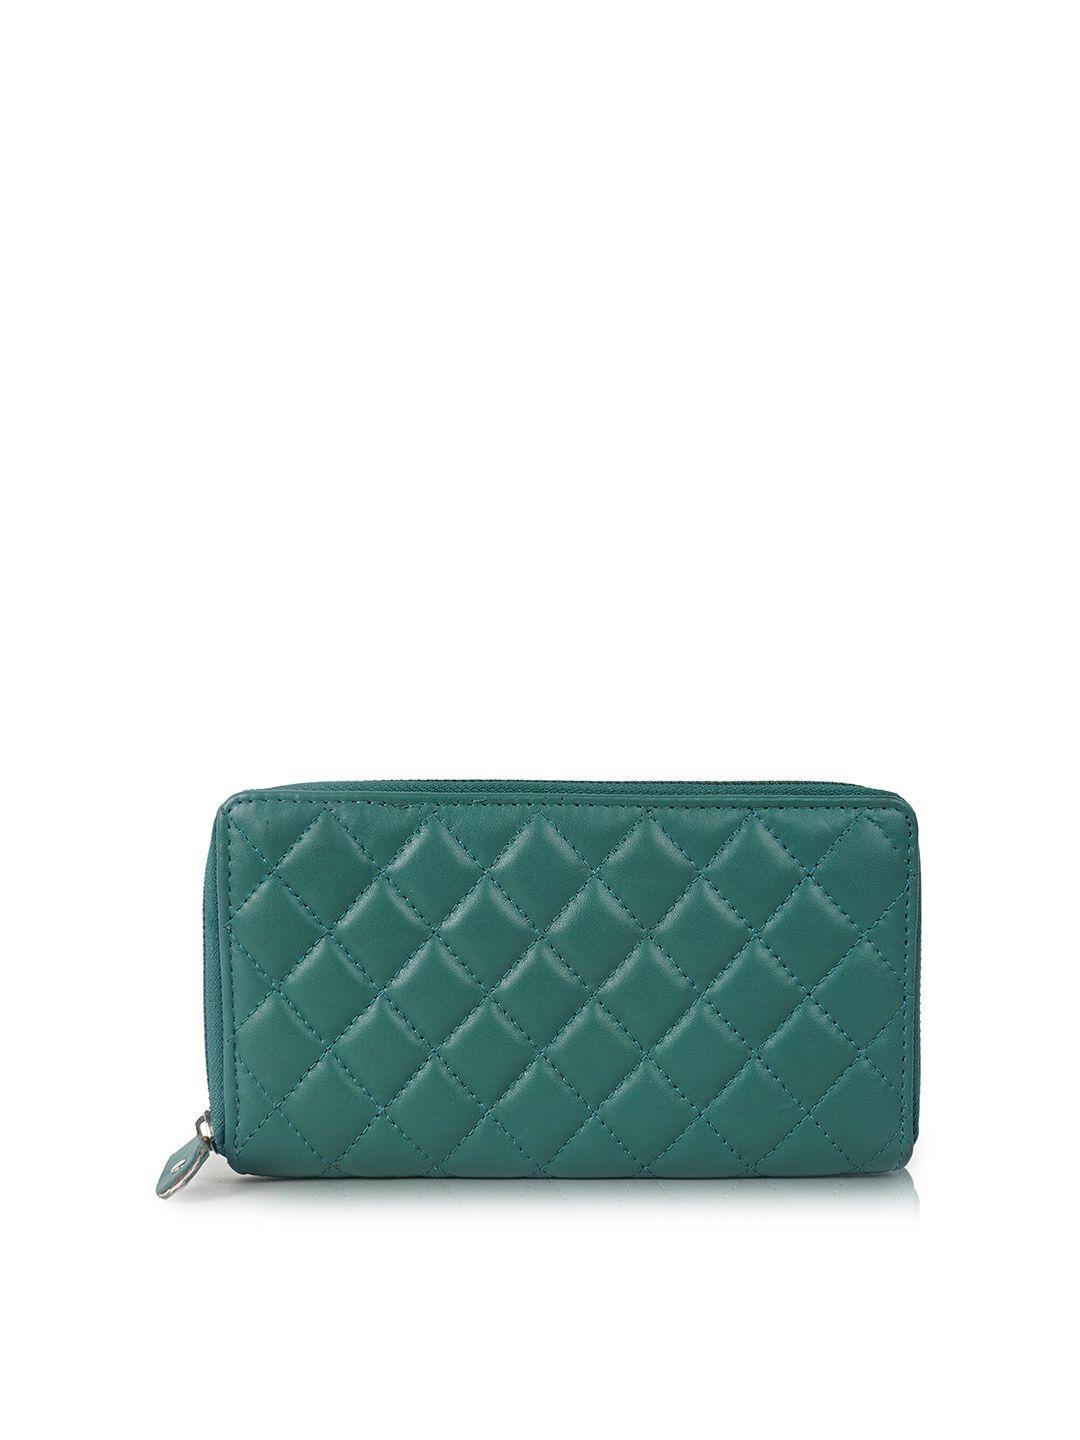 cimoni women green quilted leather zip around wallet